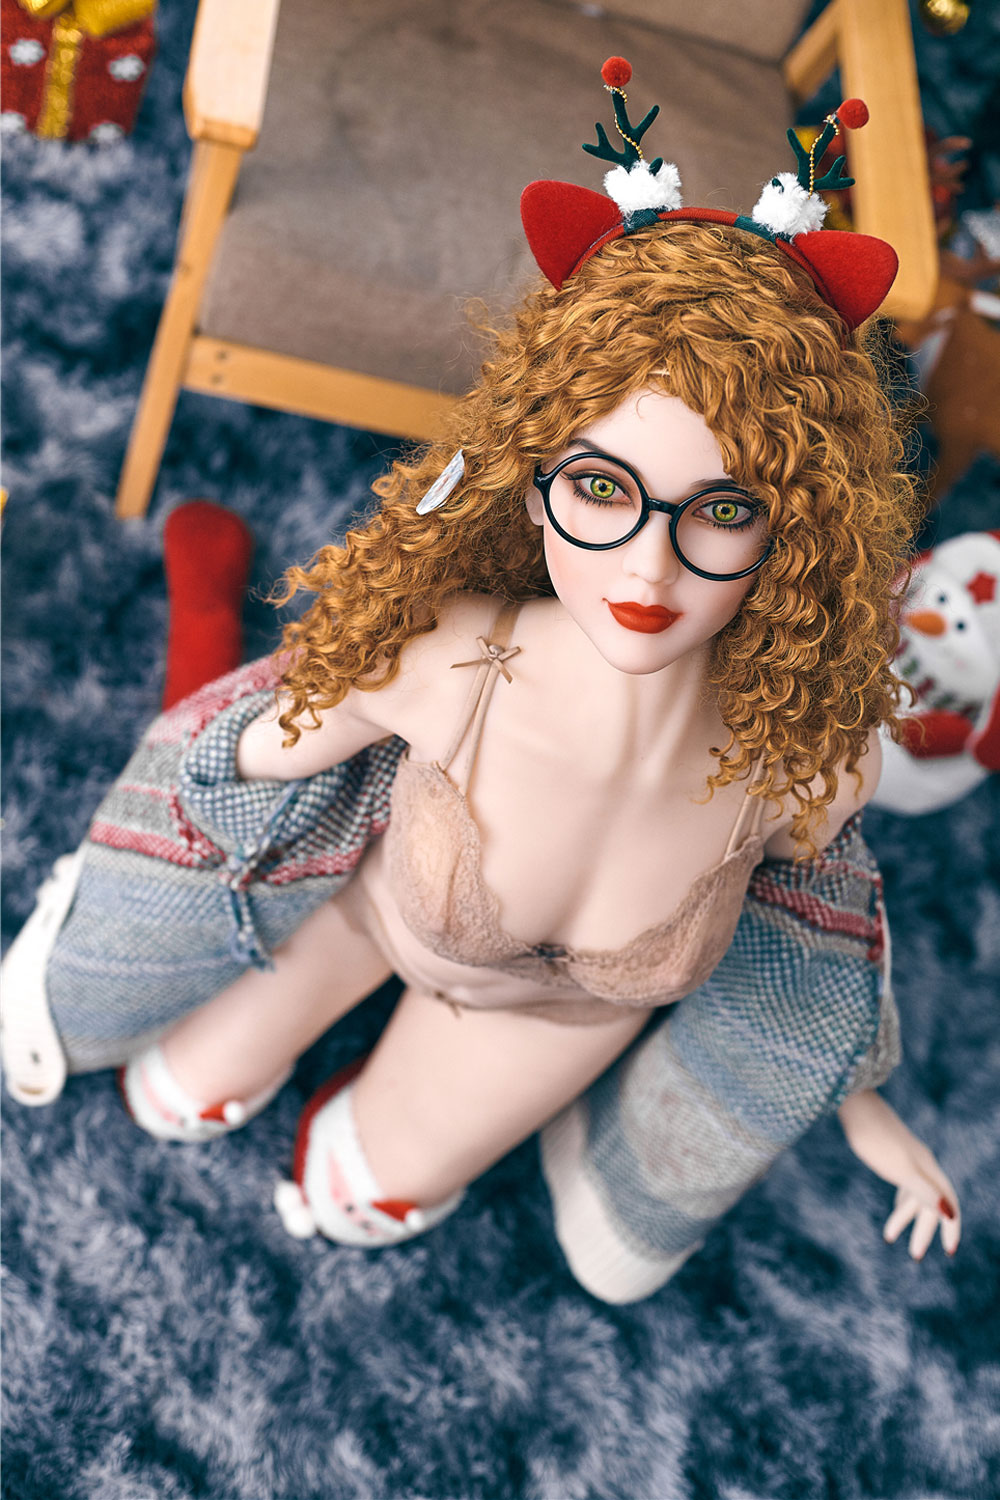 Realistic muñecas dolls adultos